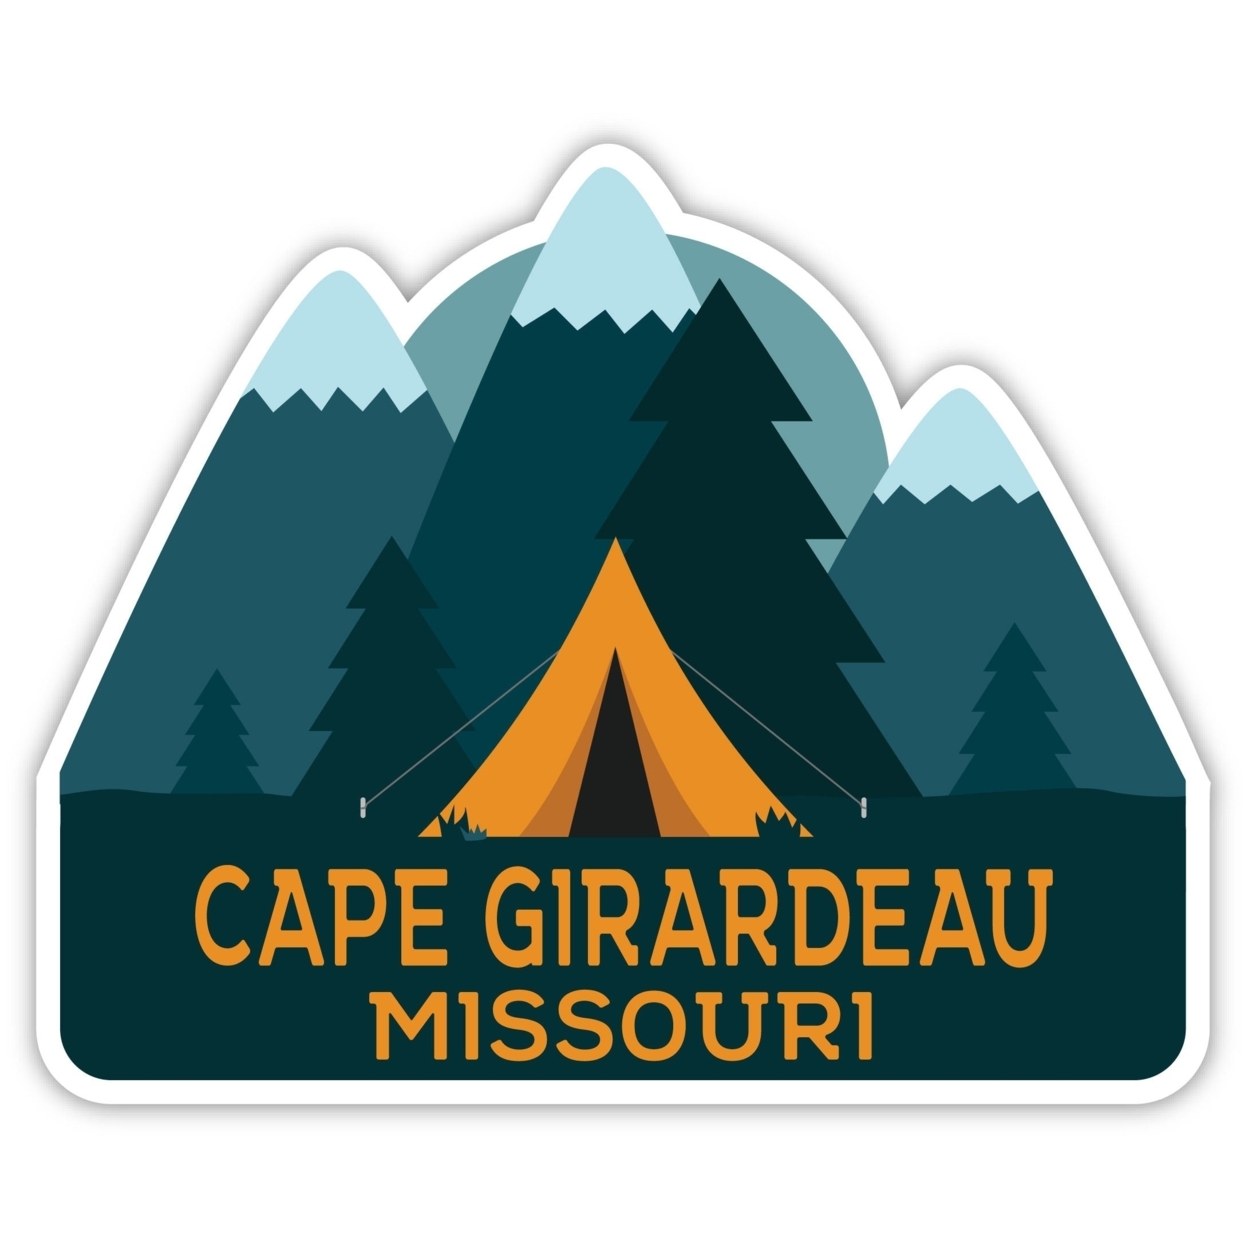 Cape Girardeau Missouri Souvenir Decorative Stickers (Choose Theme And Size) - 4-Pack, 10-Inch, Tent